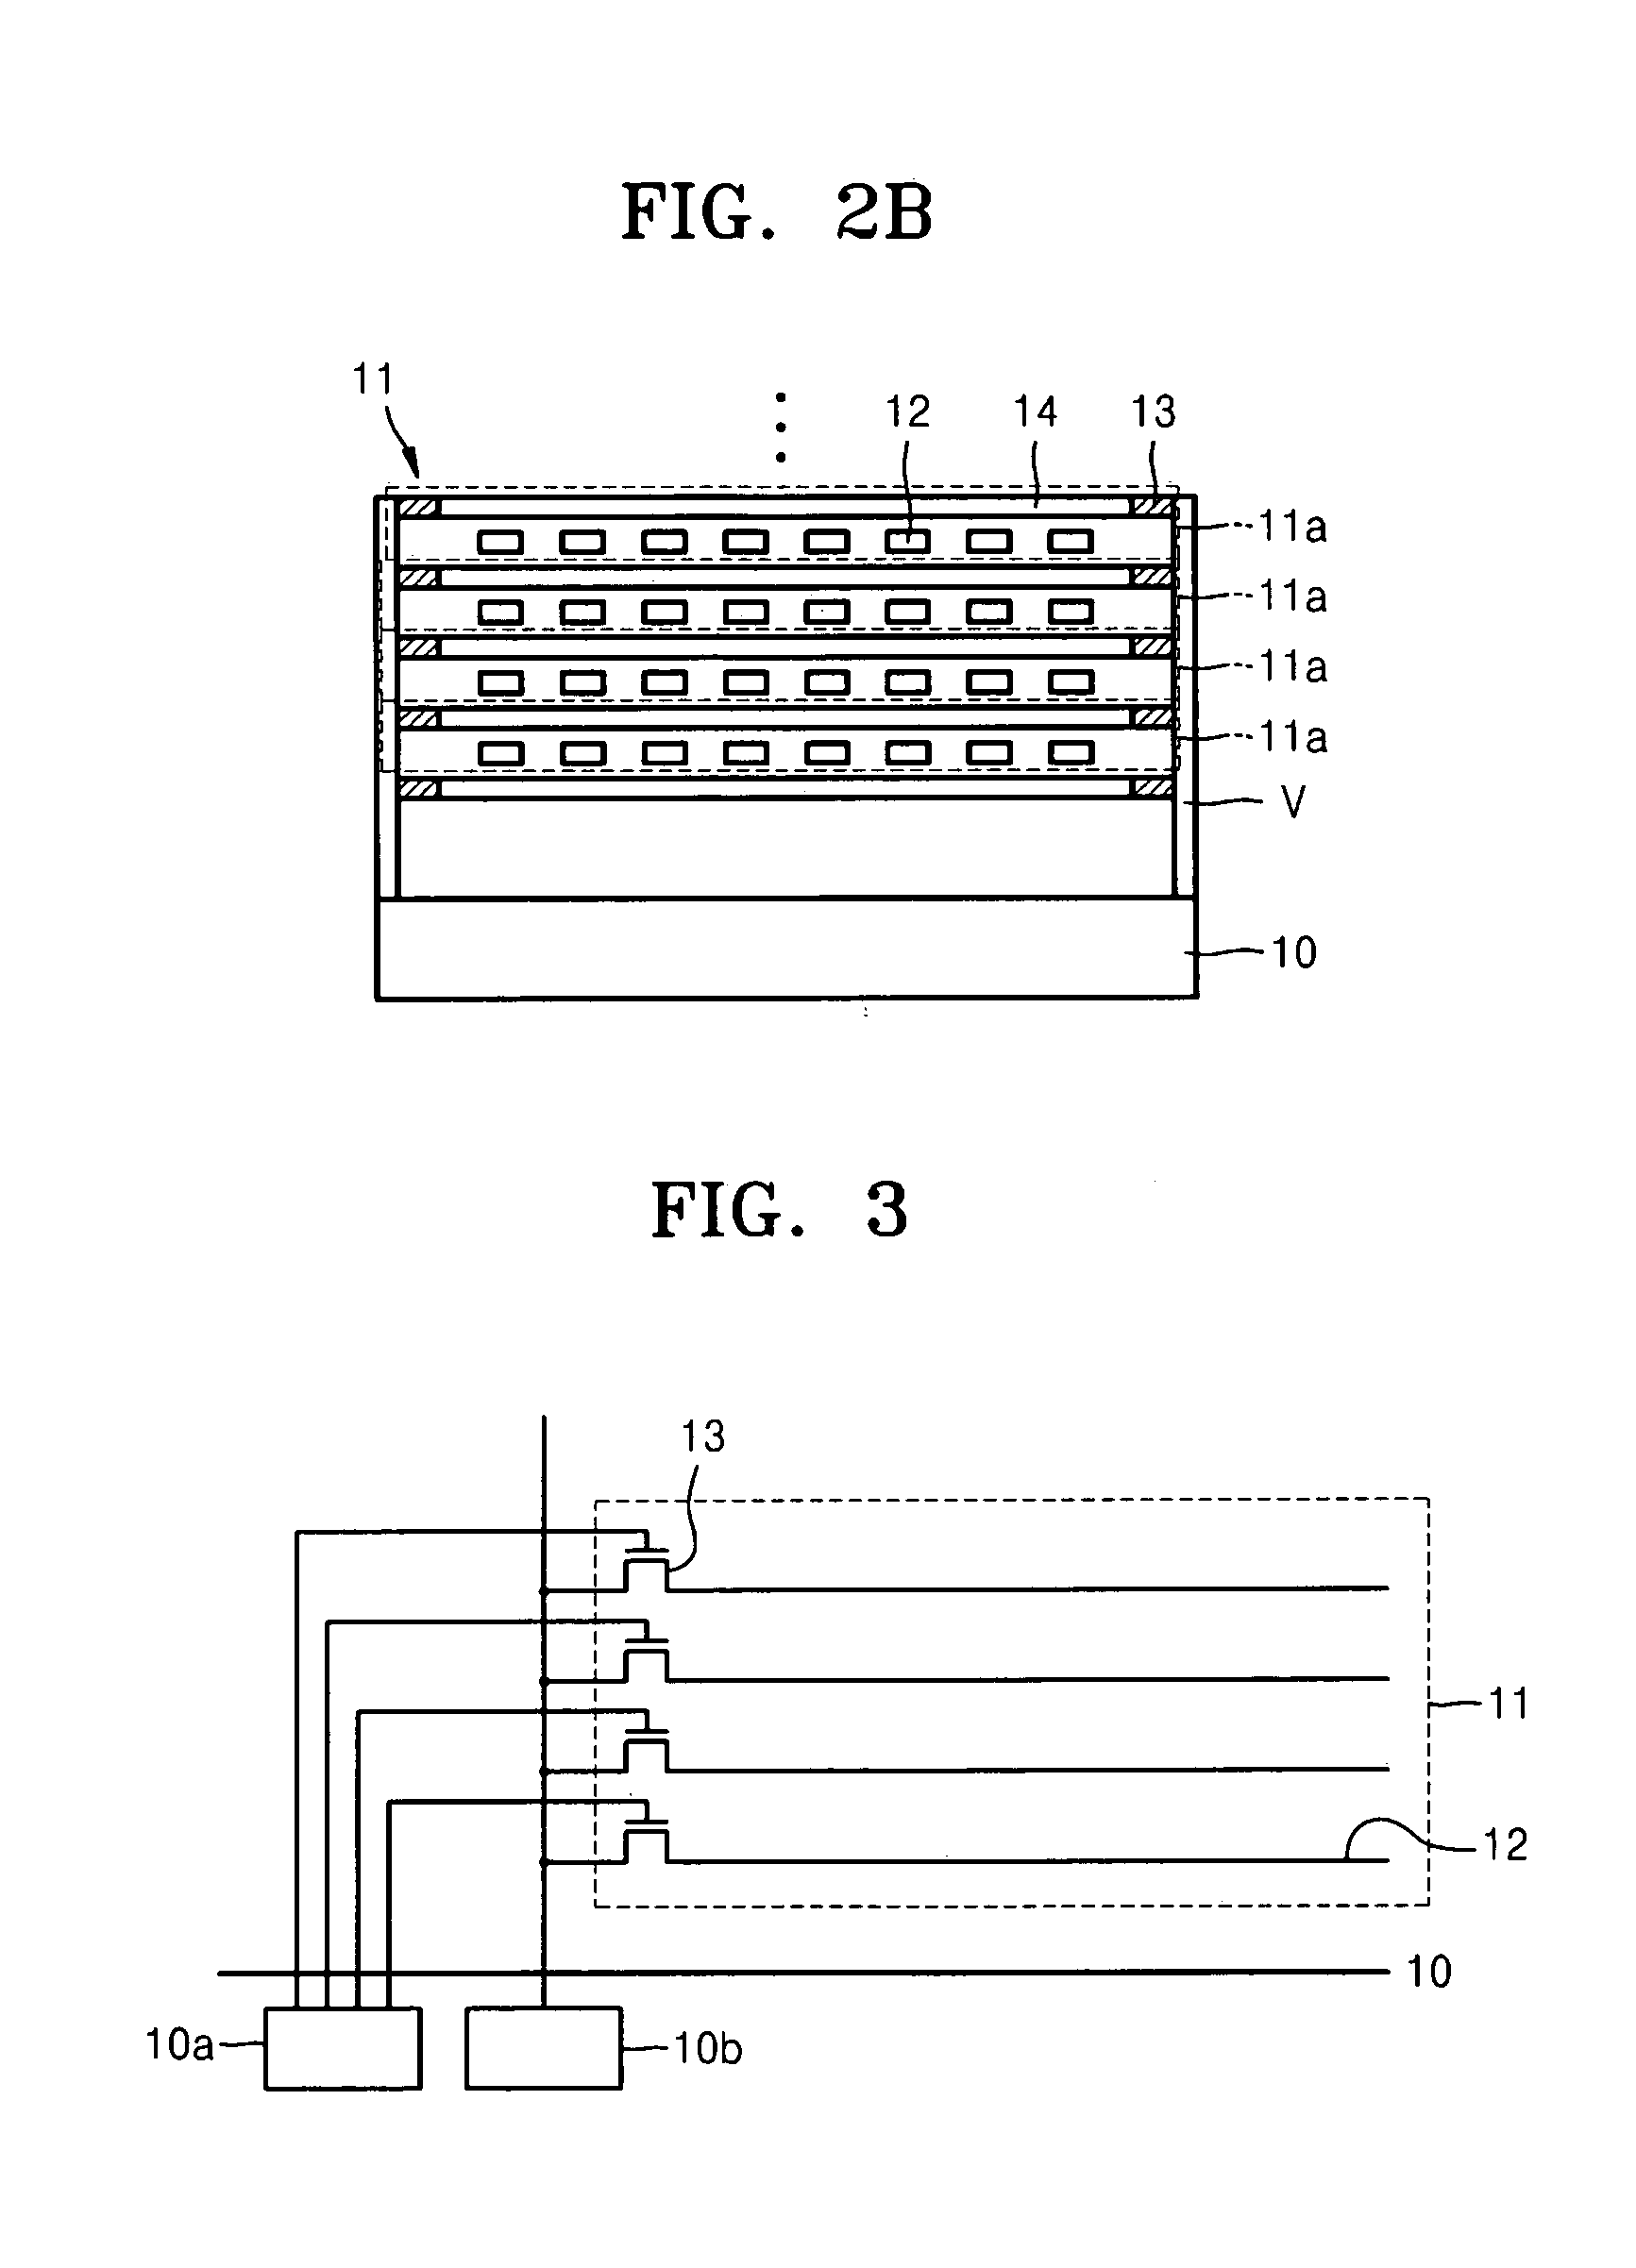 Multi-layered memory apparatus including oxide thin film transistor